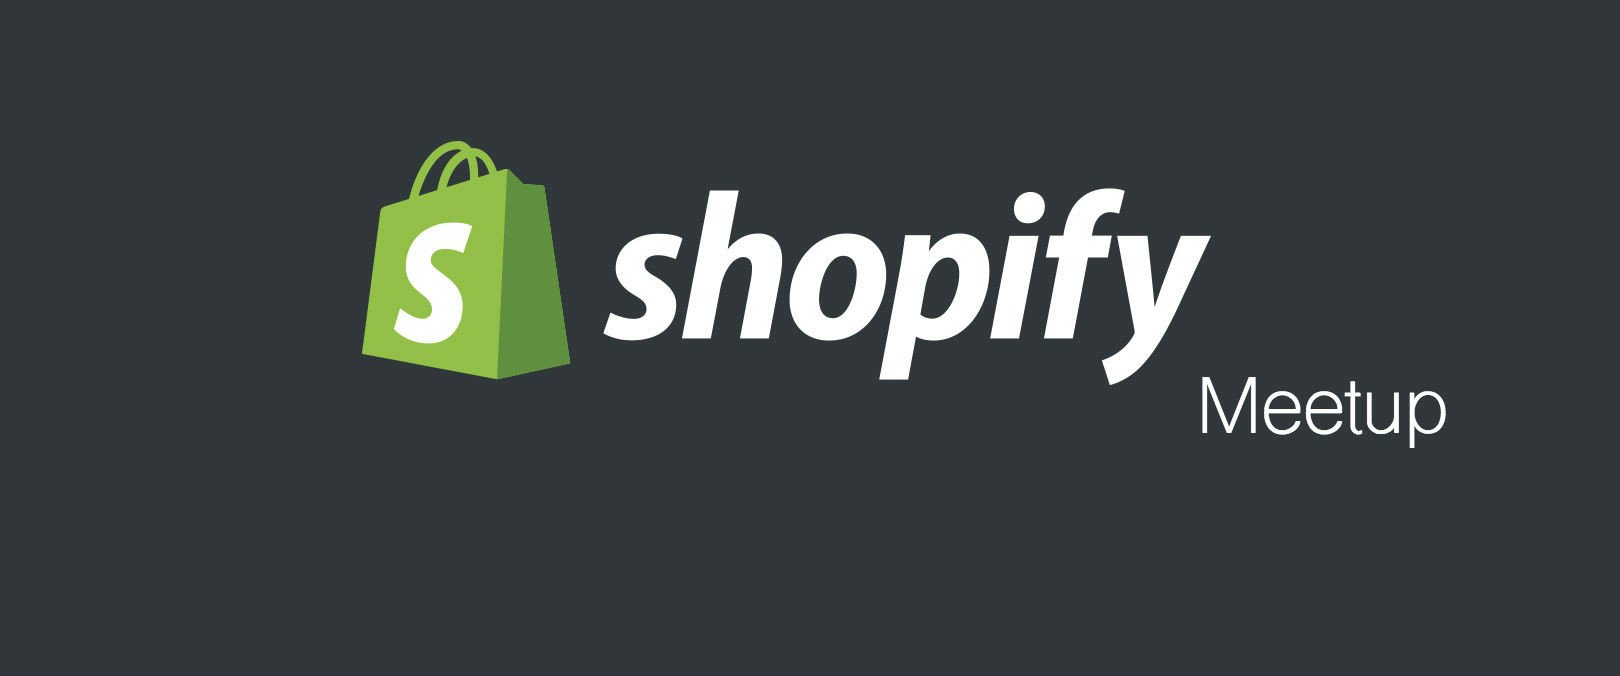 shopify meetup